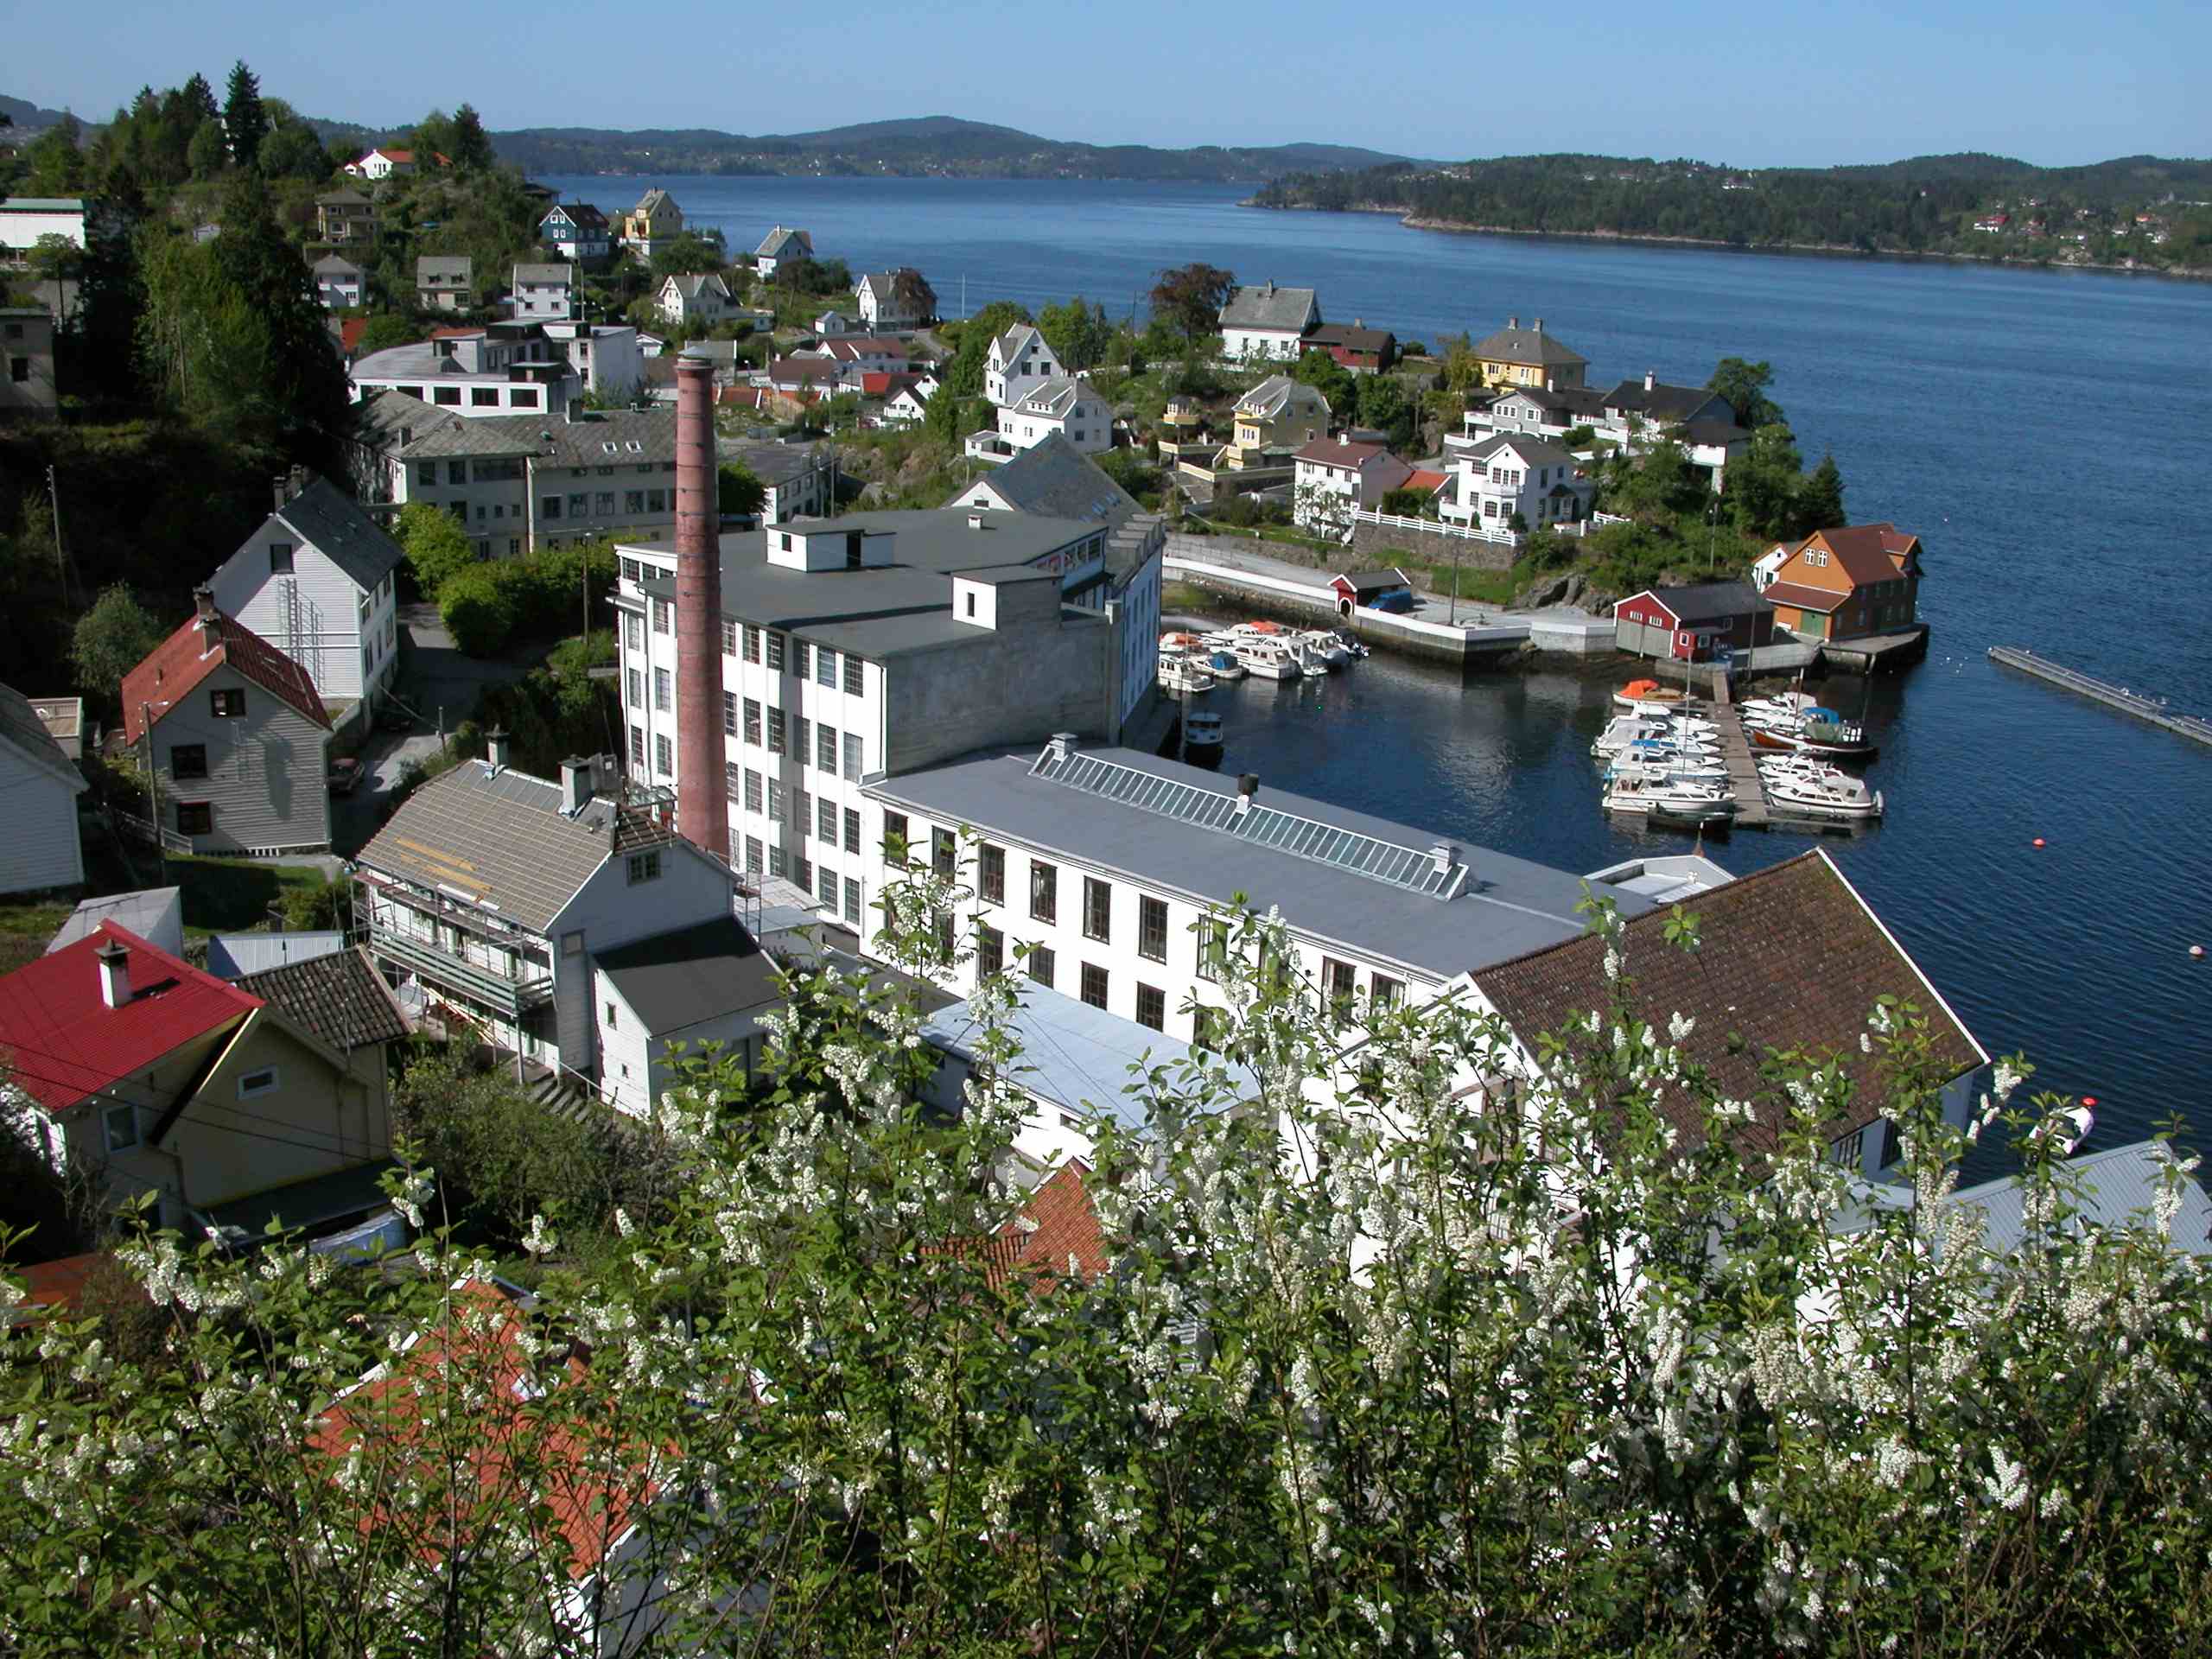 Norsk Trikotasjemuseum